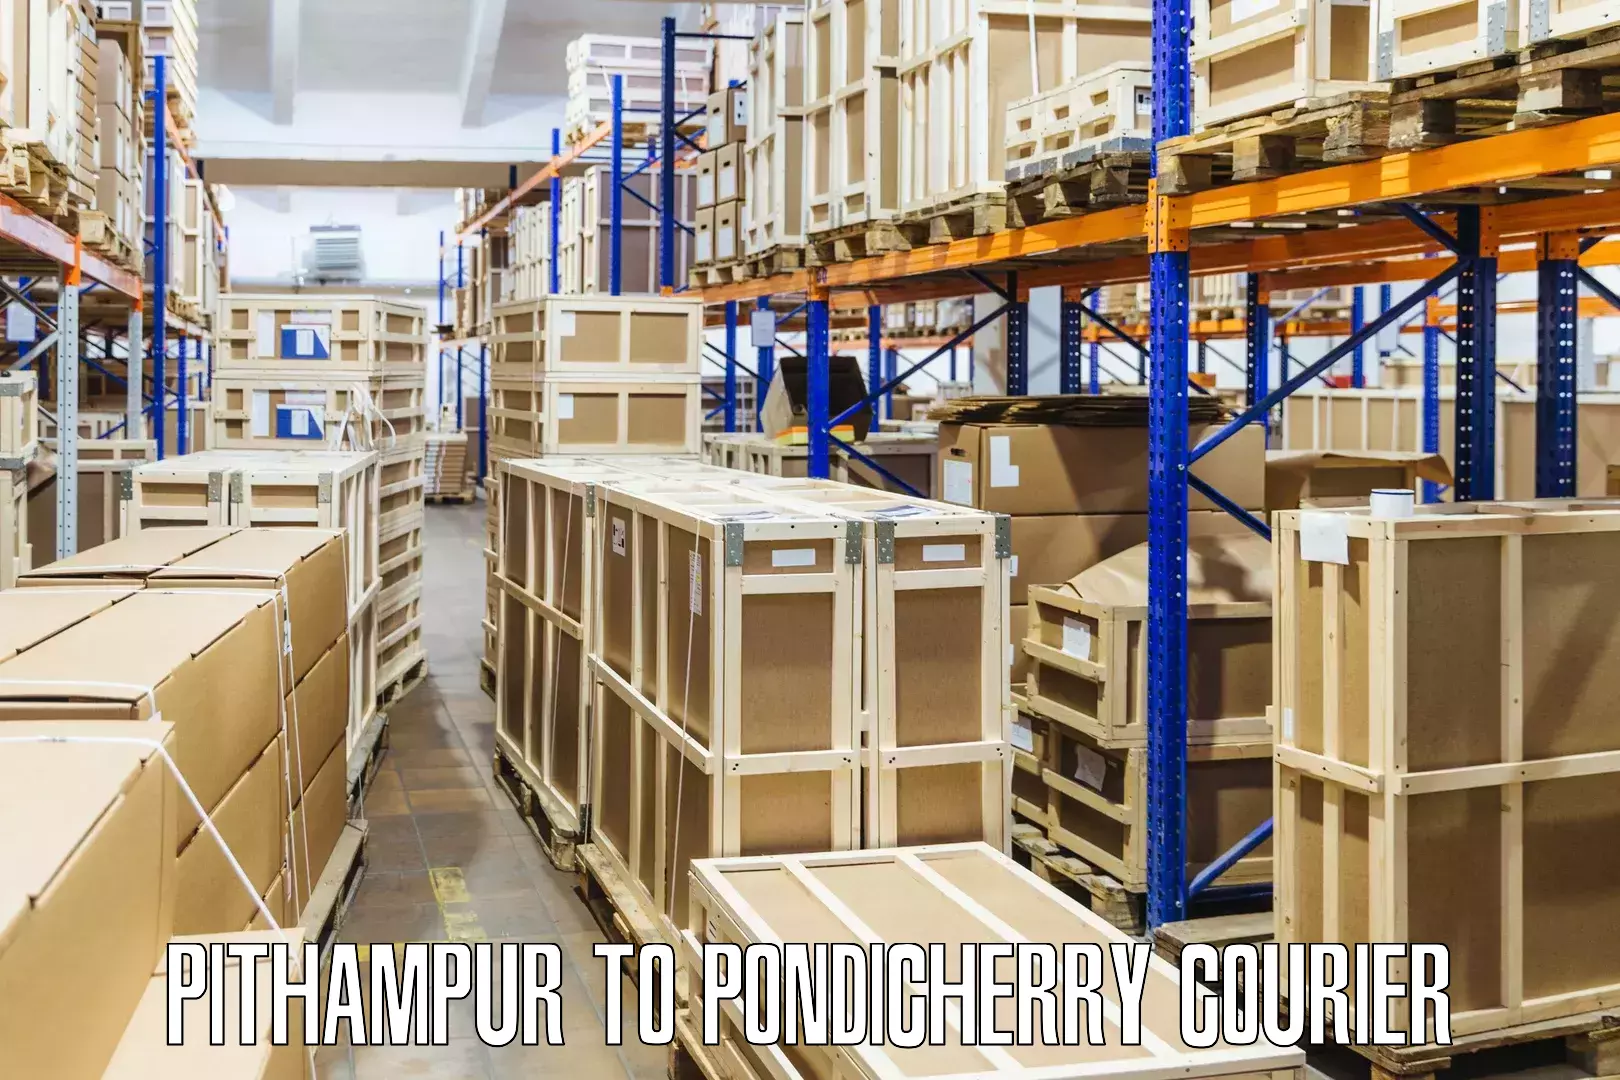 Global logistics network Pithampur to Pondicherry